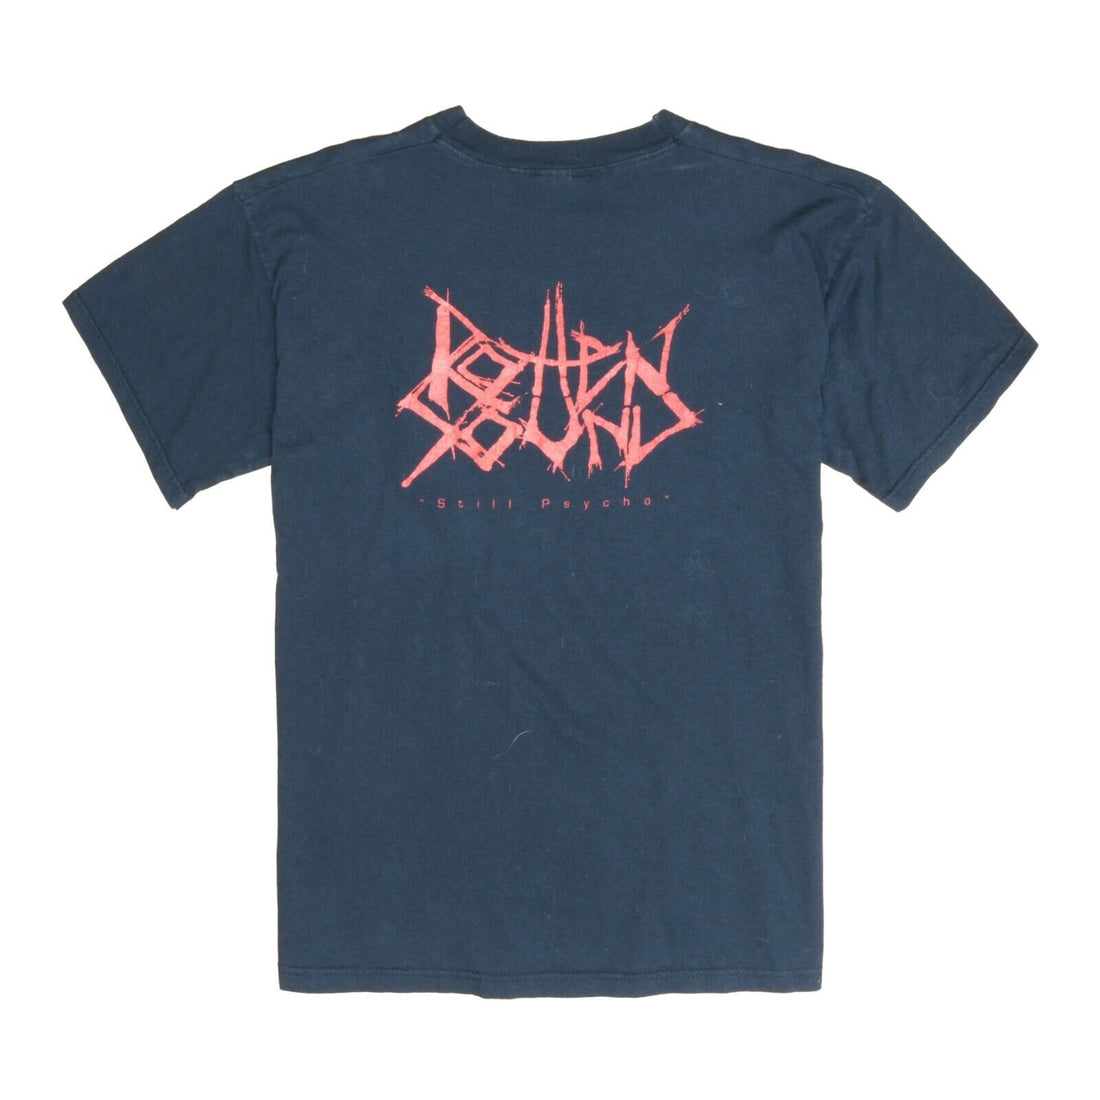 Vintage Rotten Sound Still Psycho T-Shirt Size Large Finnish Grindcore Band Tee